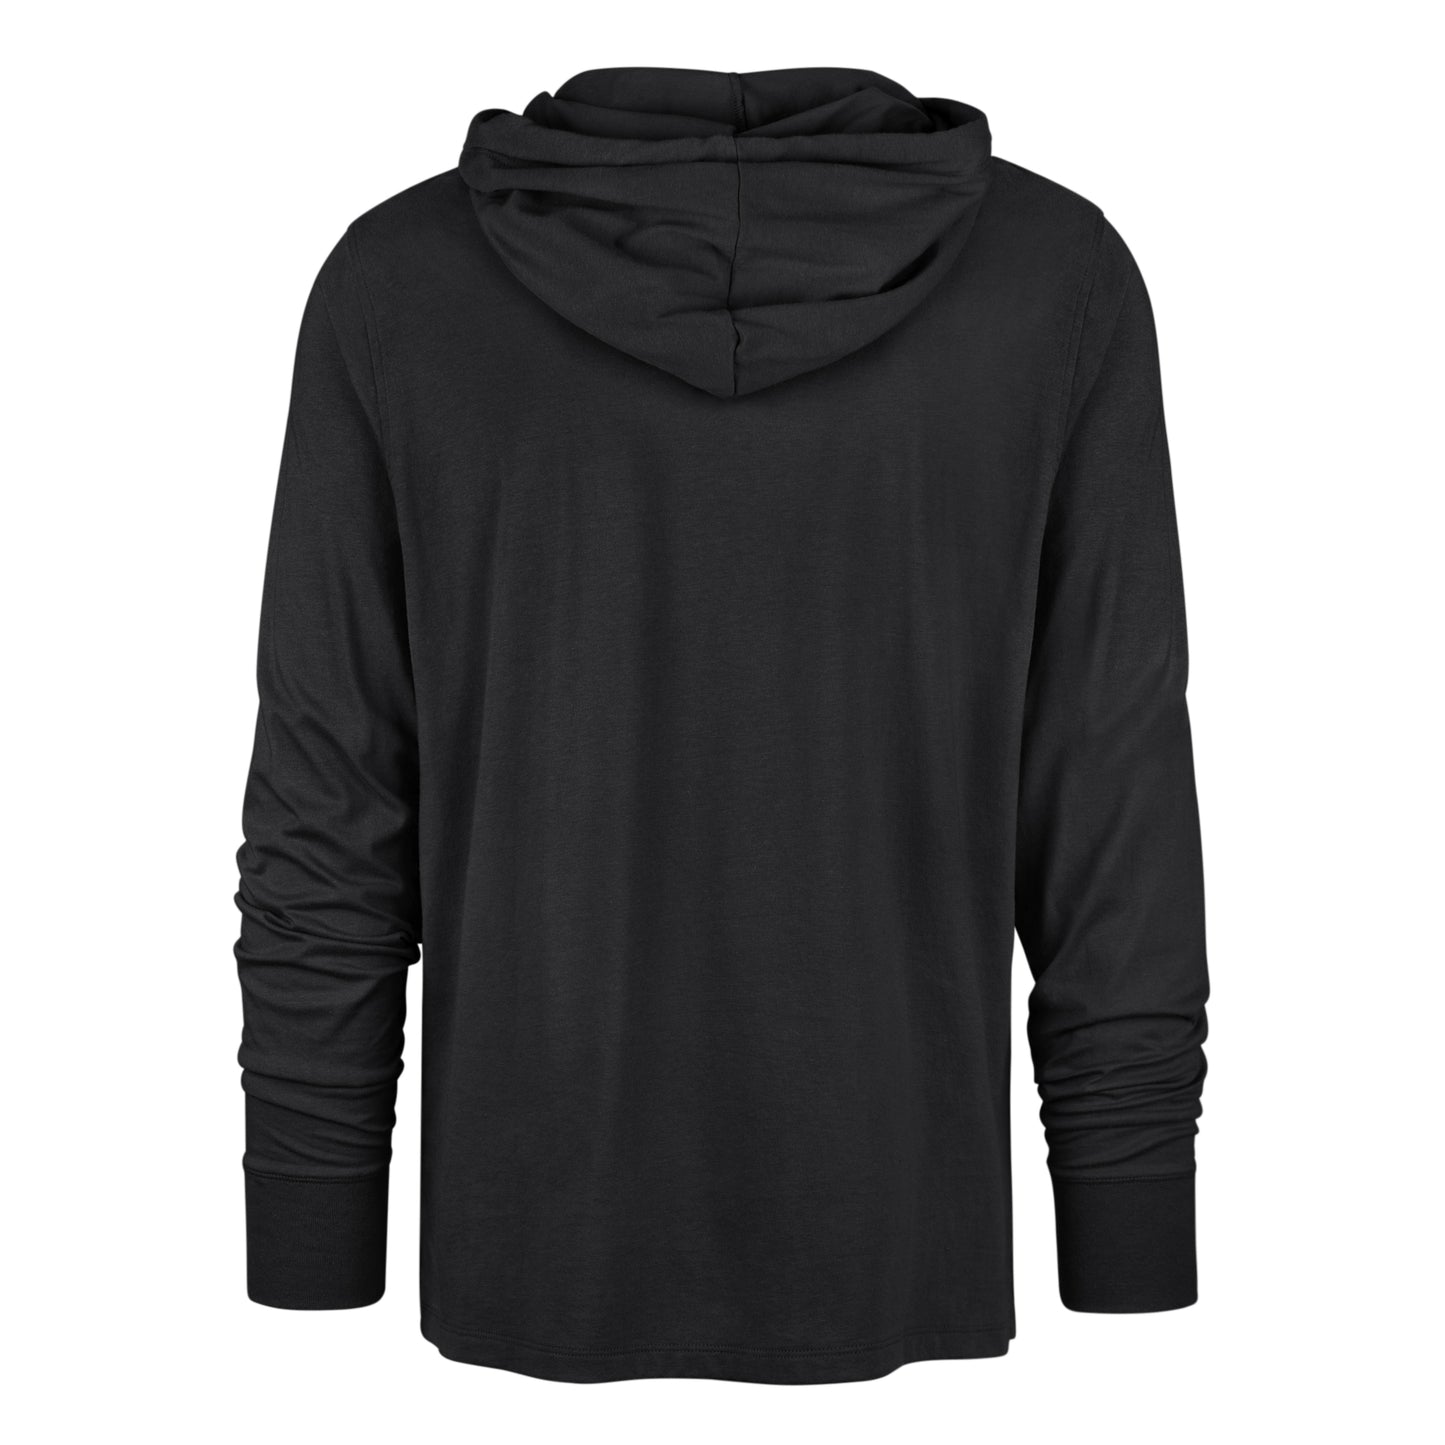 Back: Black Hooded sweatshirt